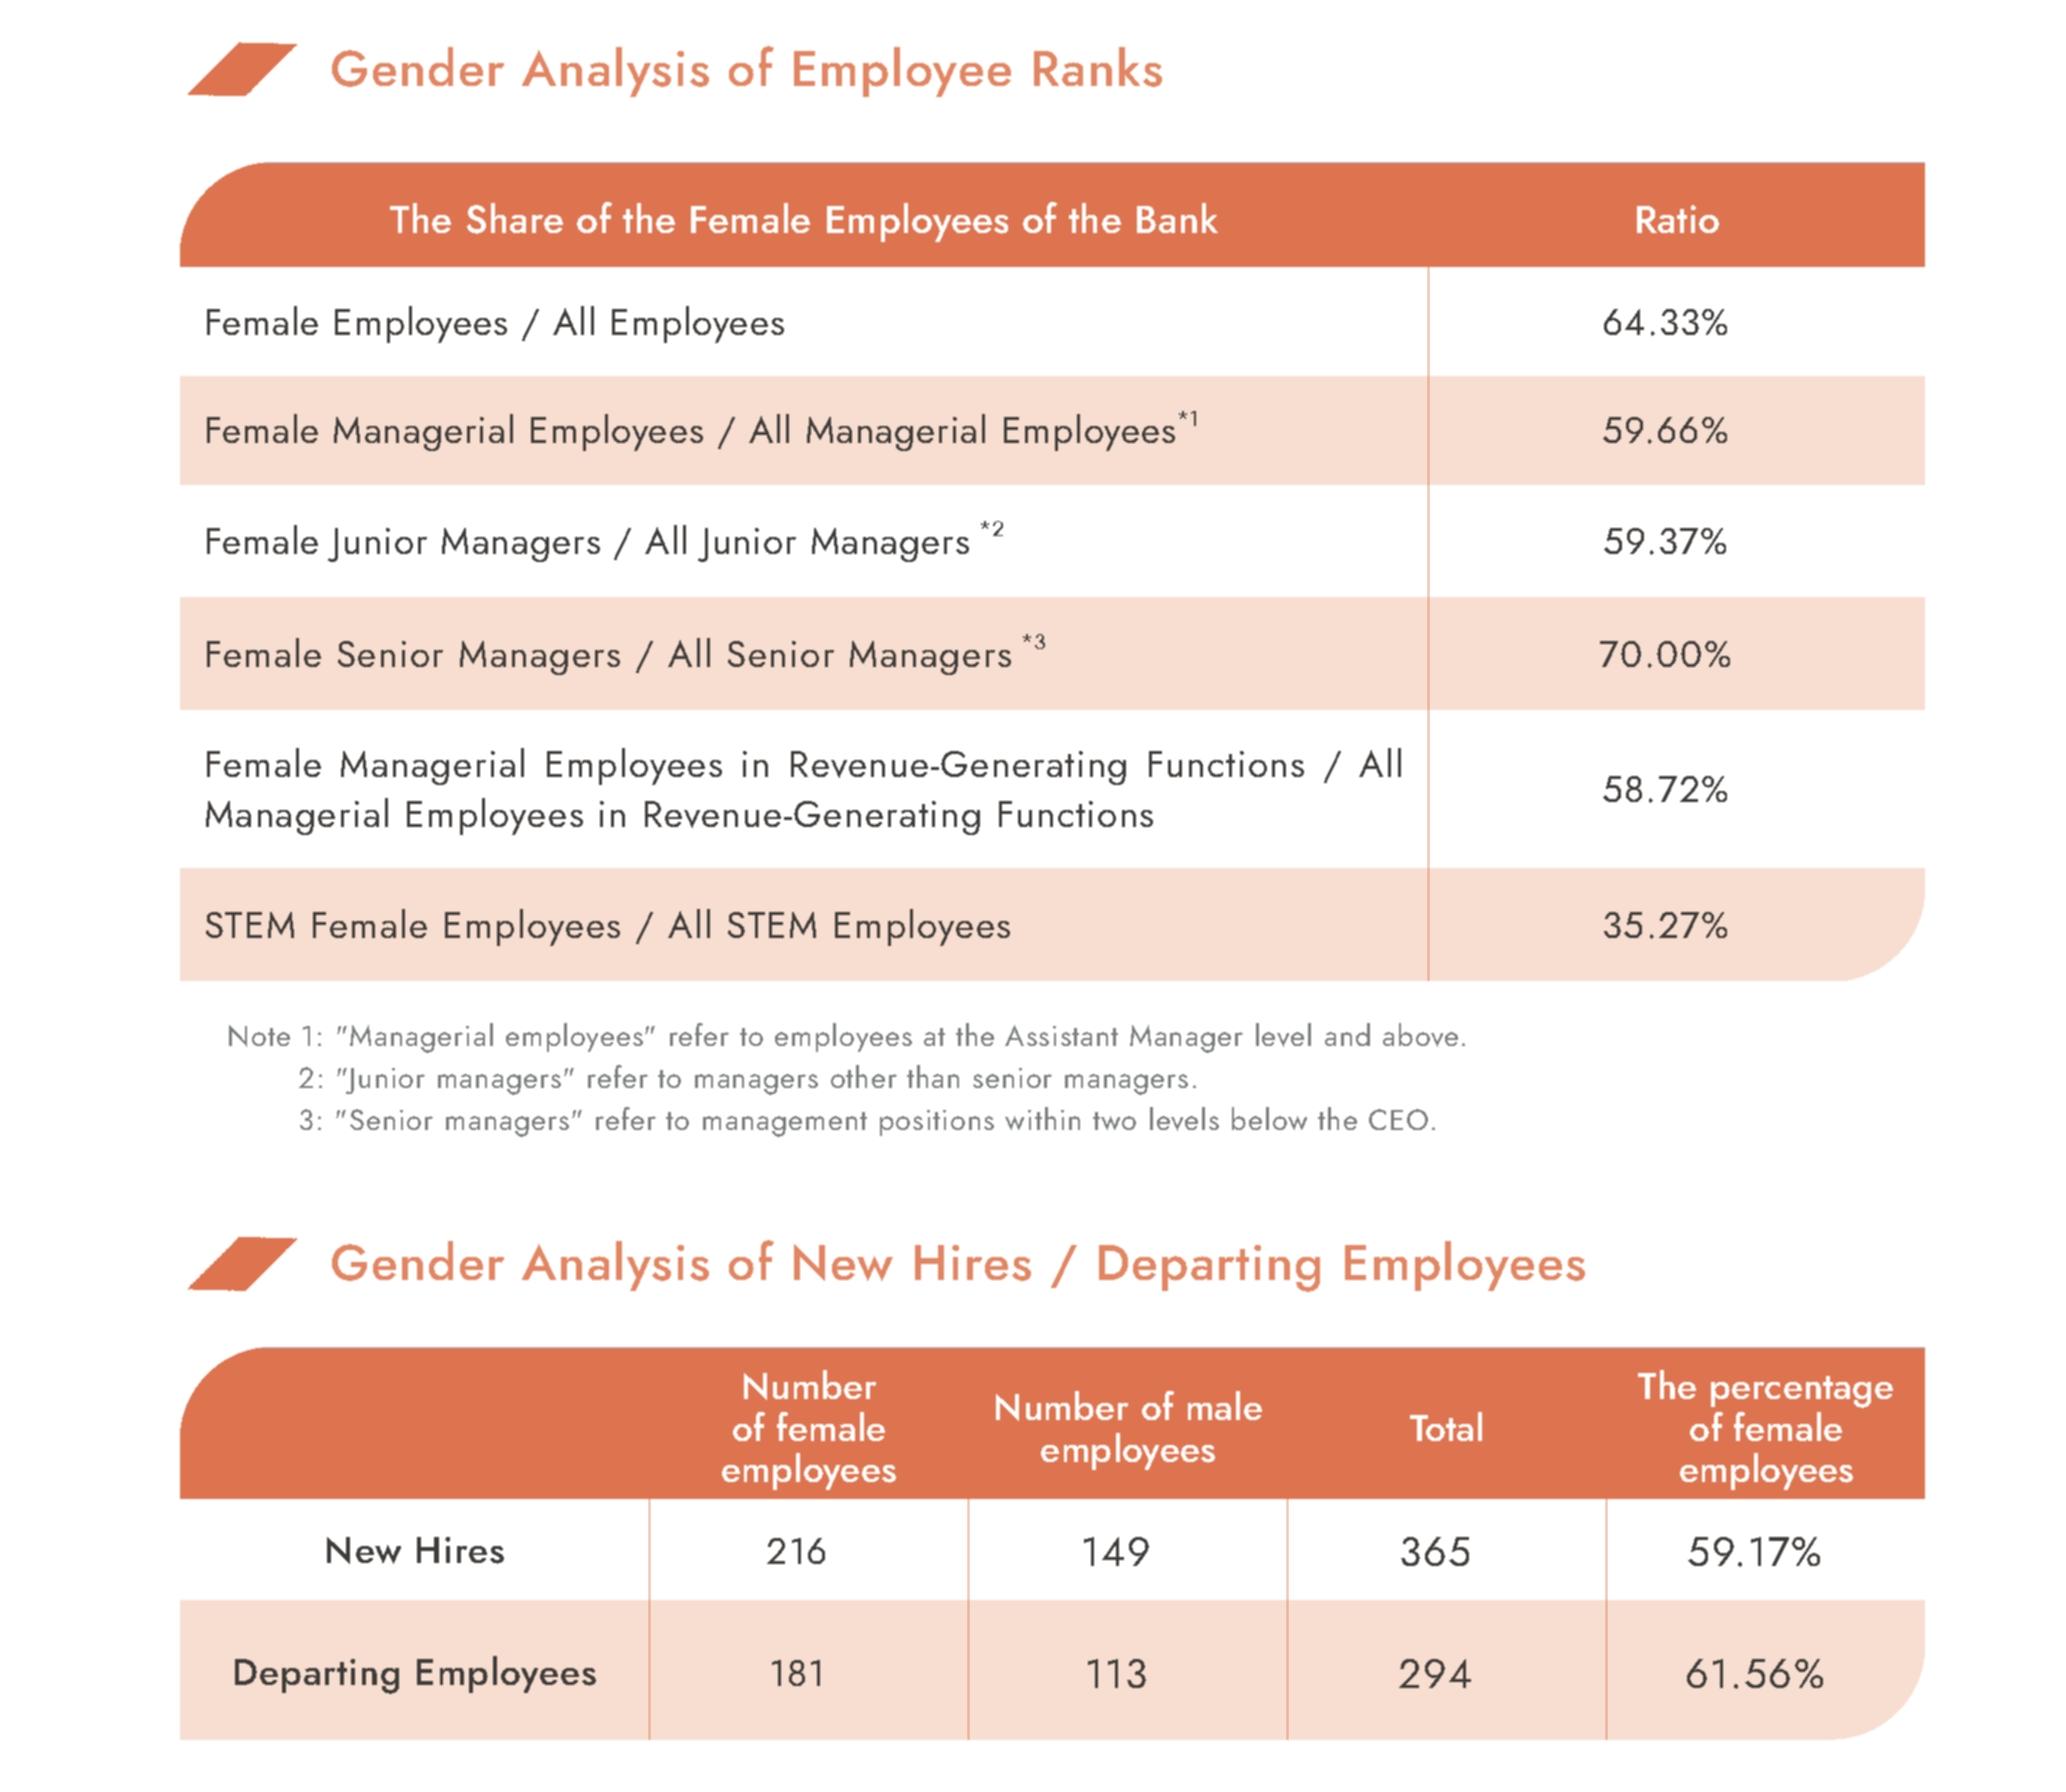 Gender Analysis of Employee Ranks